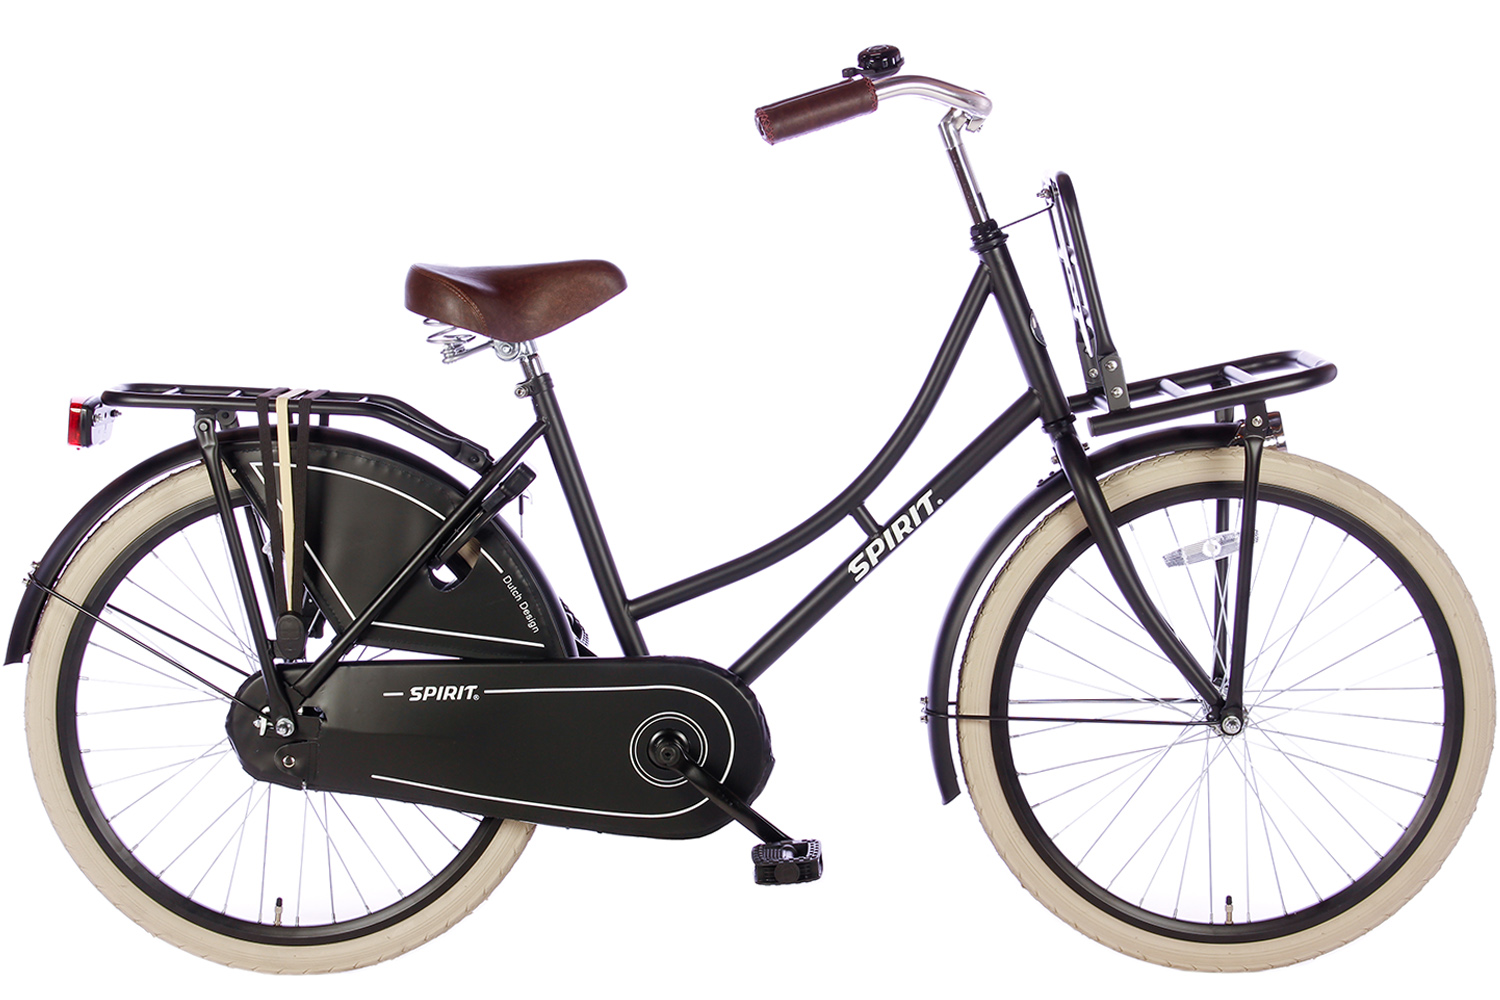 spanning Aftrekken deksel Spirit Omafiets Mat-Zwart 24 inch - Laak Bike